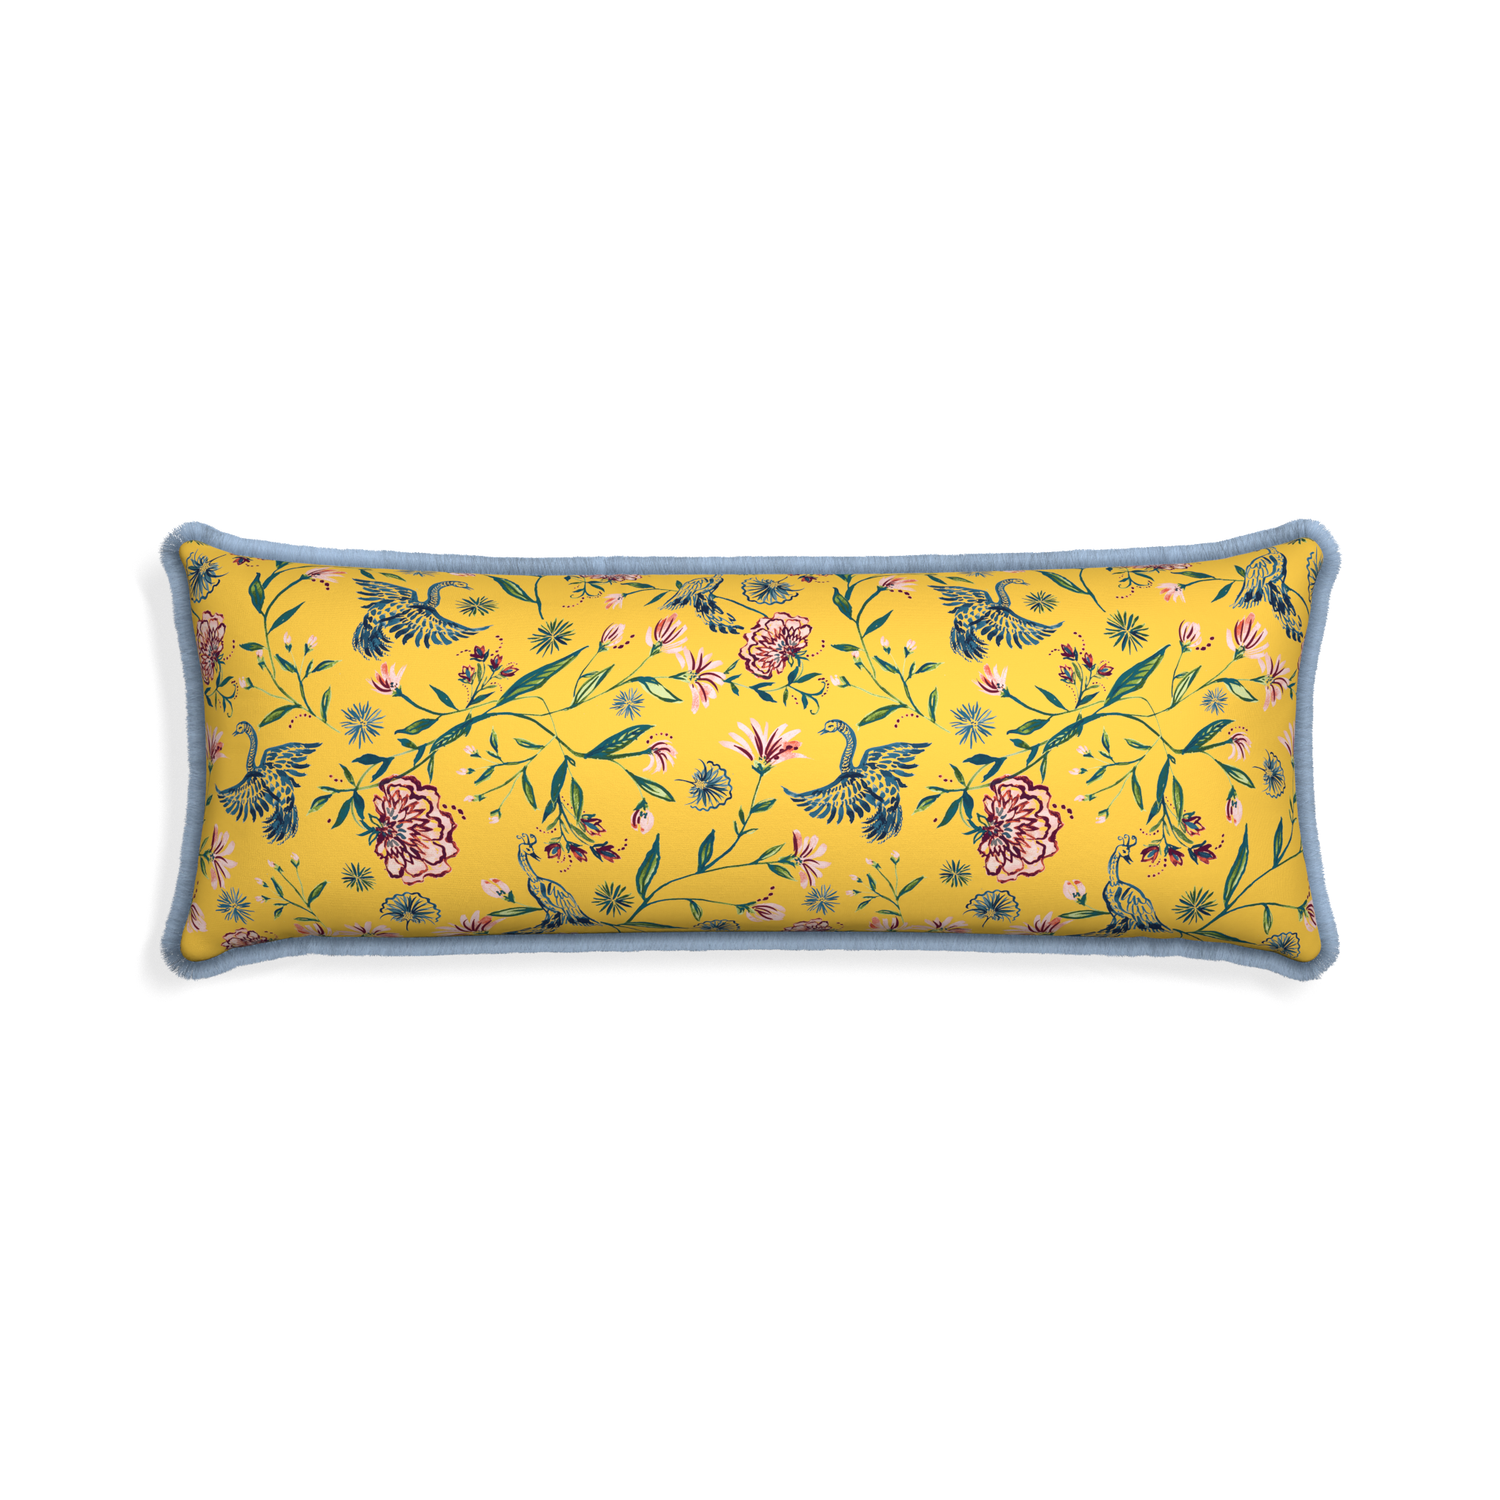 Xl-lumbar daphne canary custom pillow with sky fringe on white background